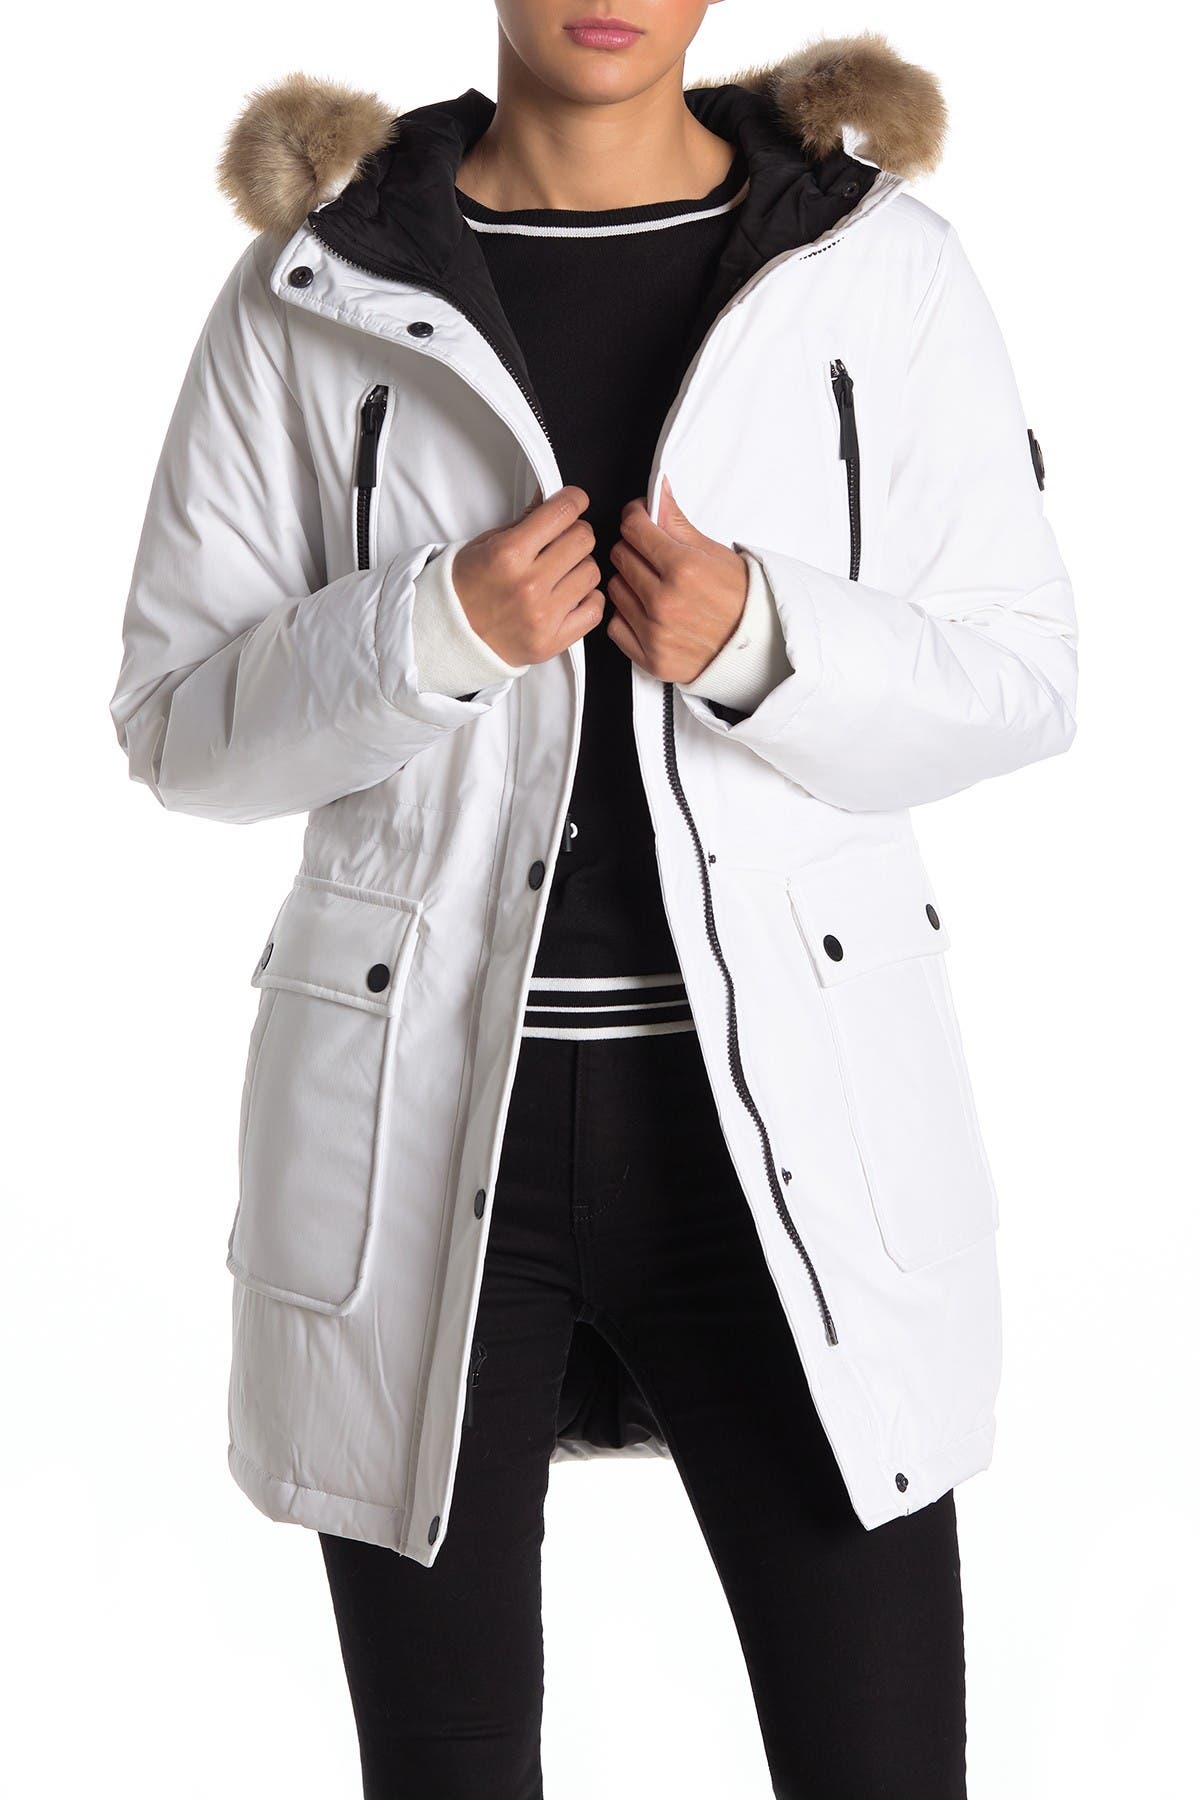 michael kors missy faux fur collared jacket